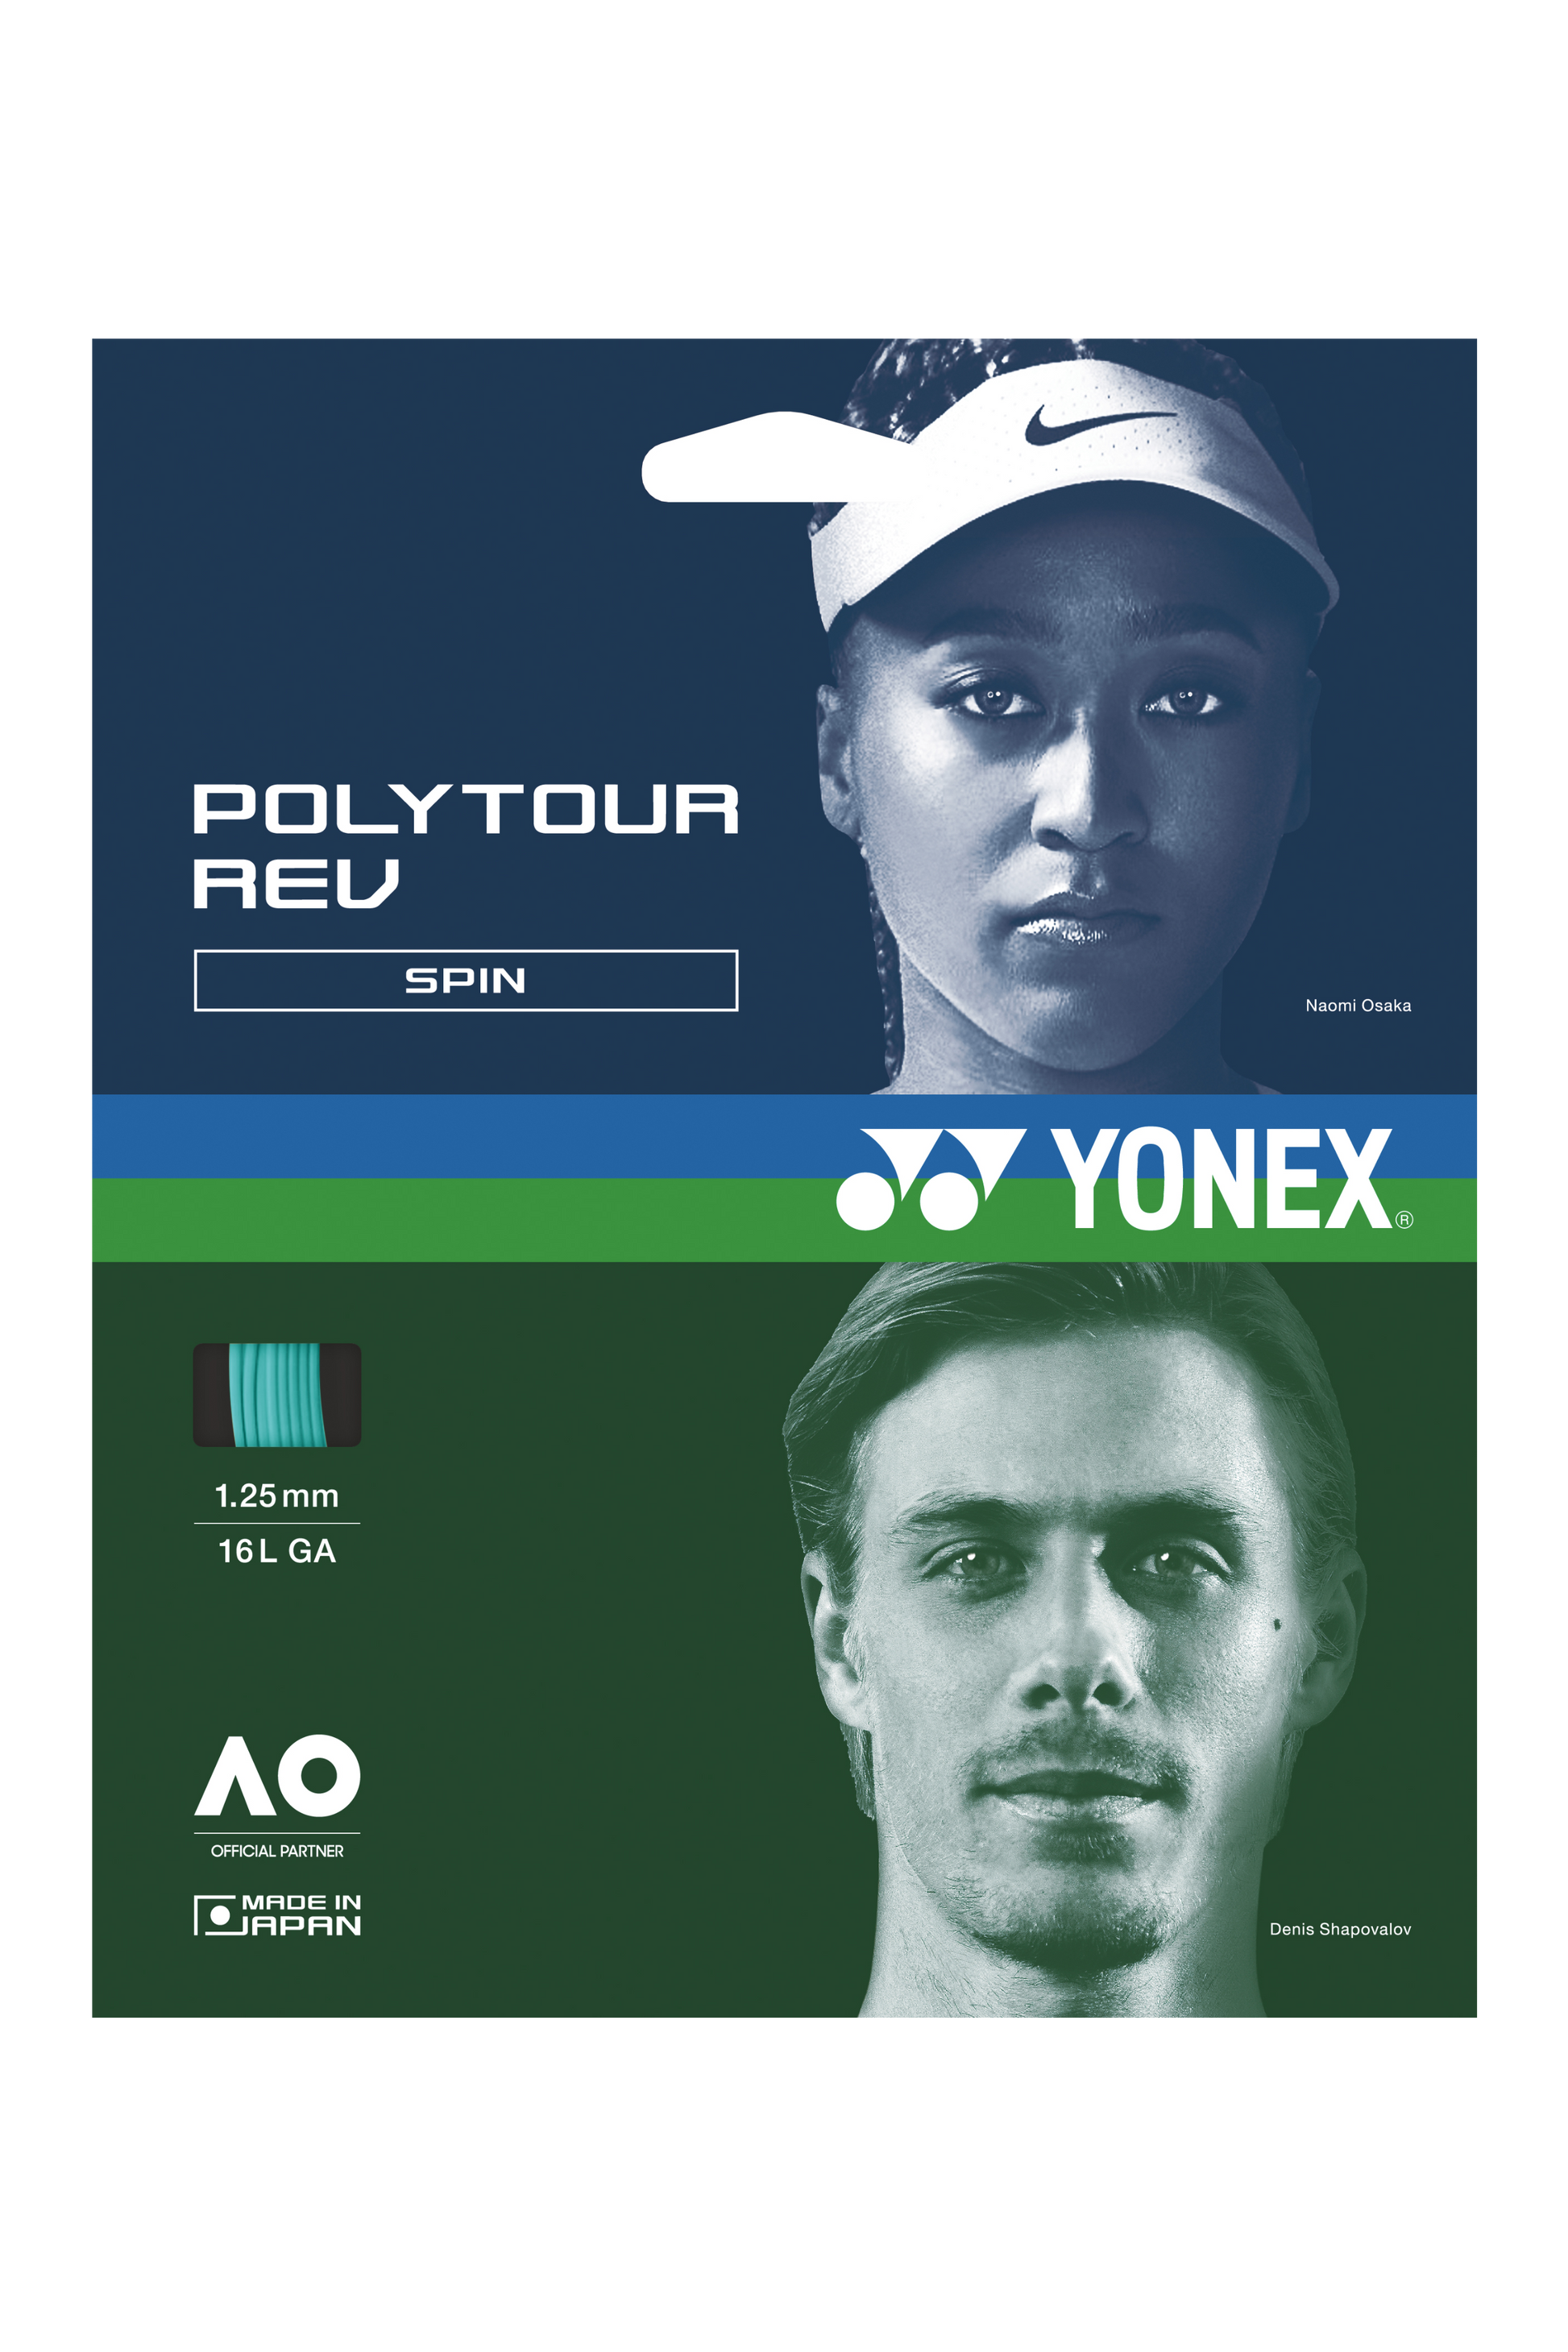 YONEX Tennis String POLYTOUR REV 130 12M - Max Sports